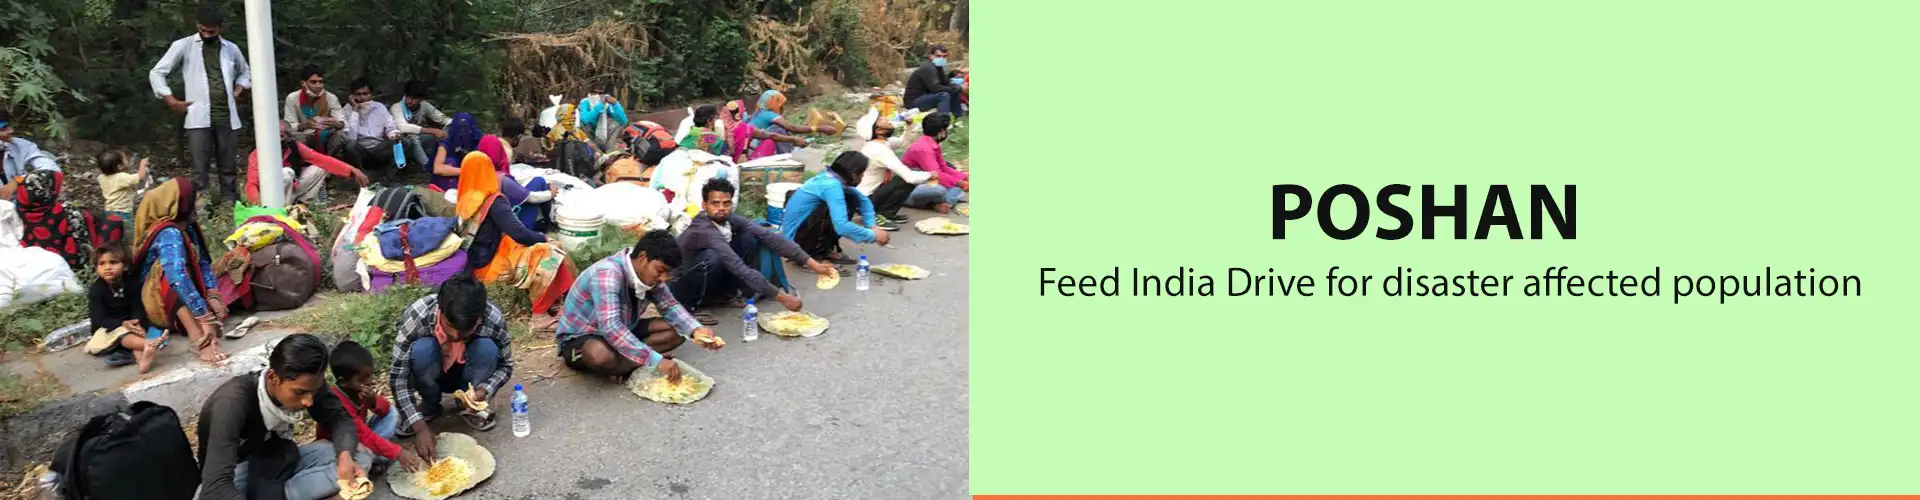 Feed India Drive